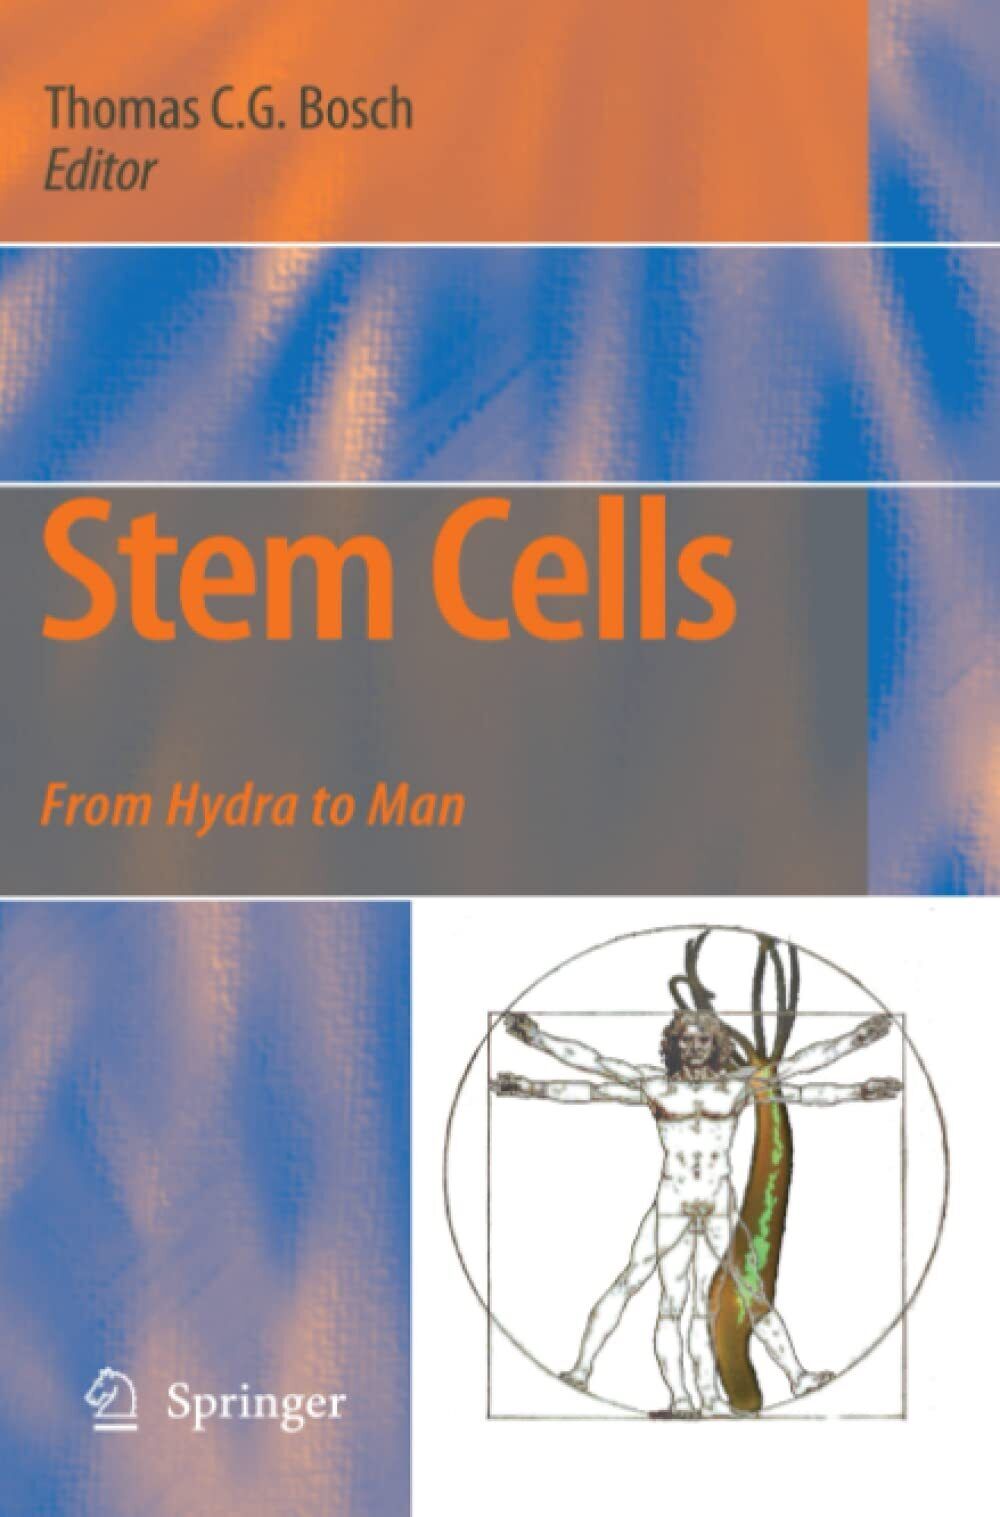 Stem Cells - Thomas C.G. Bosch - Springer, 2010